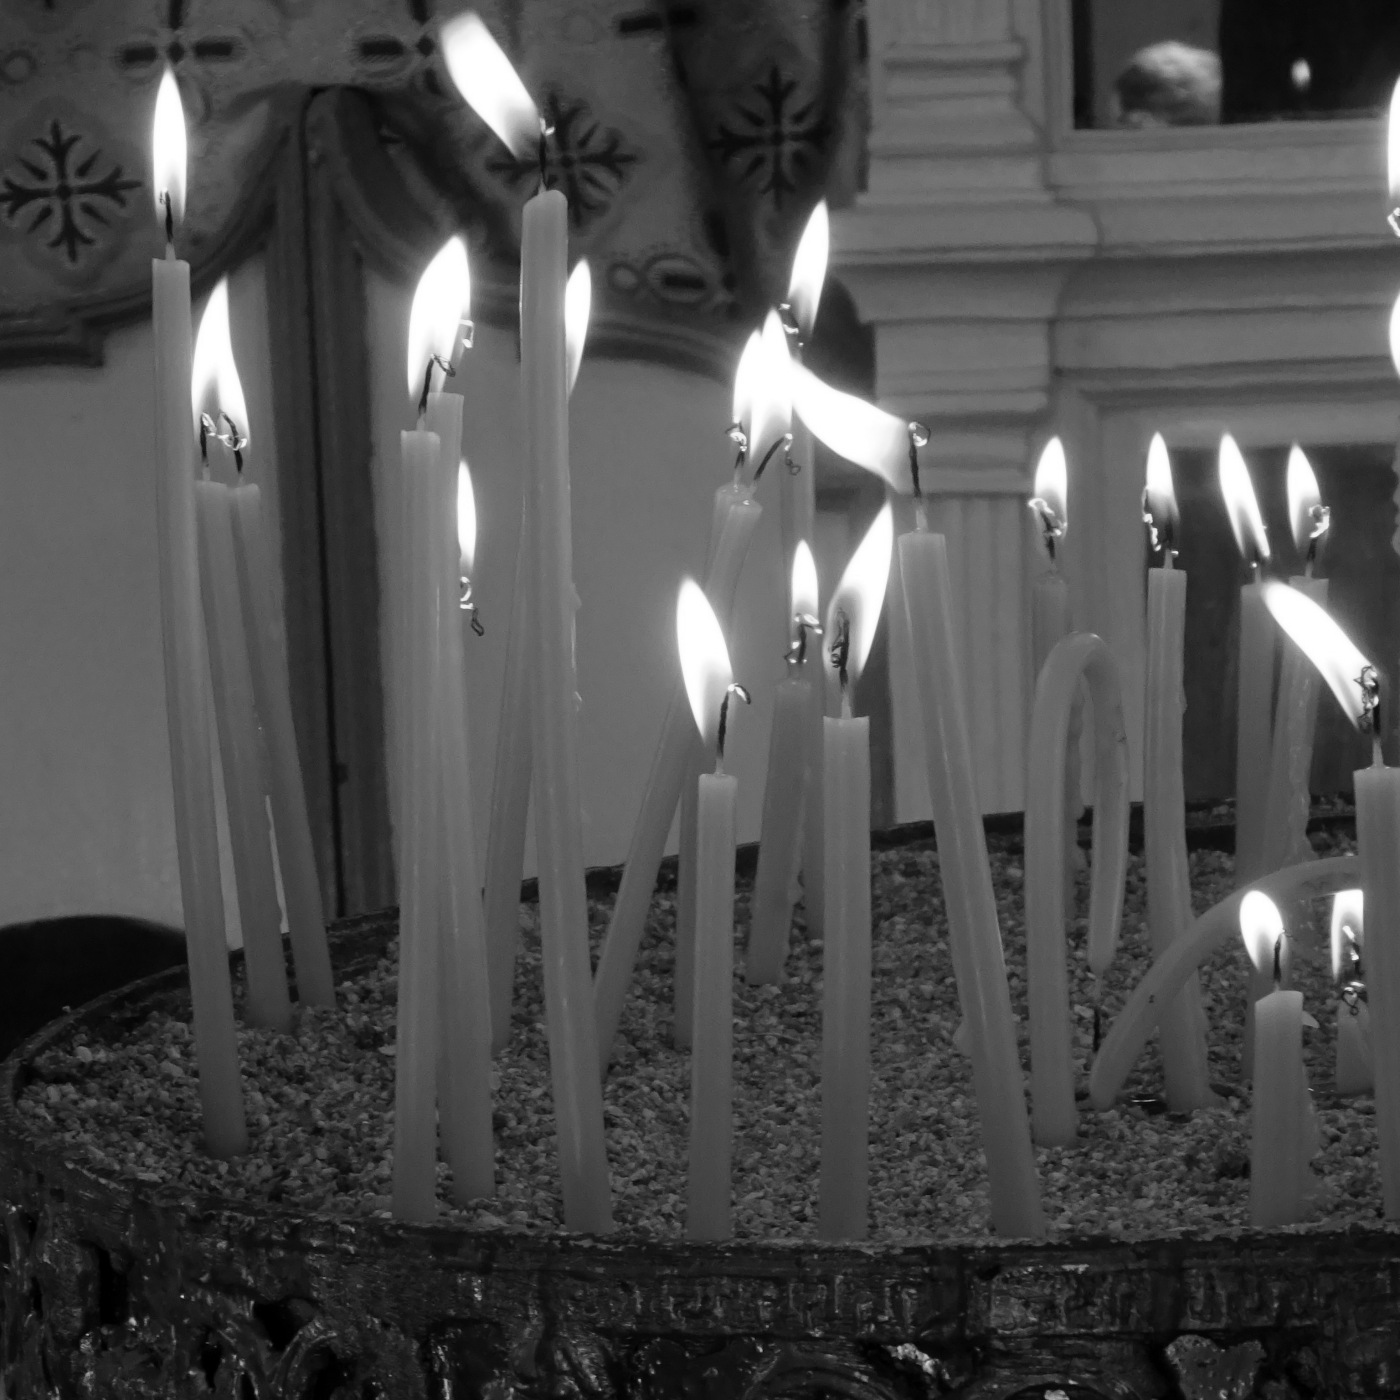 Long burning, and melting church candles